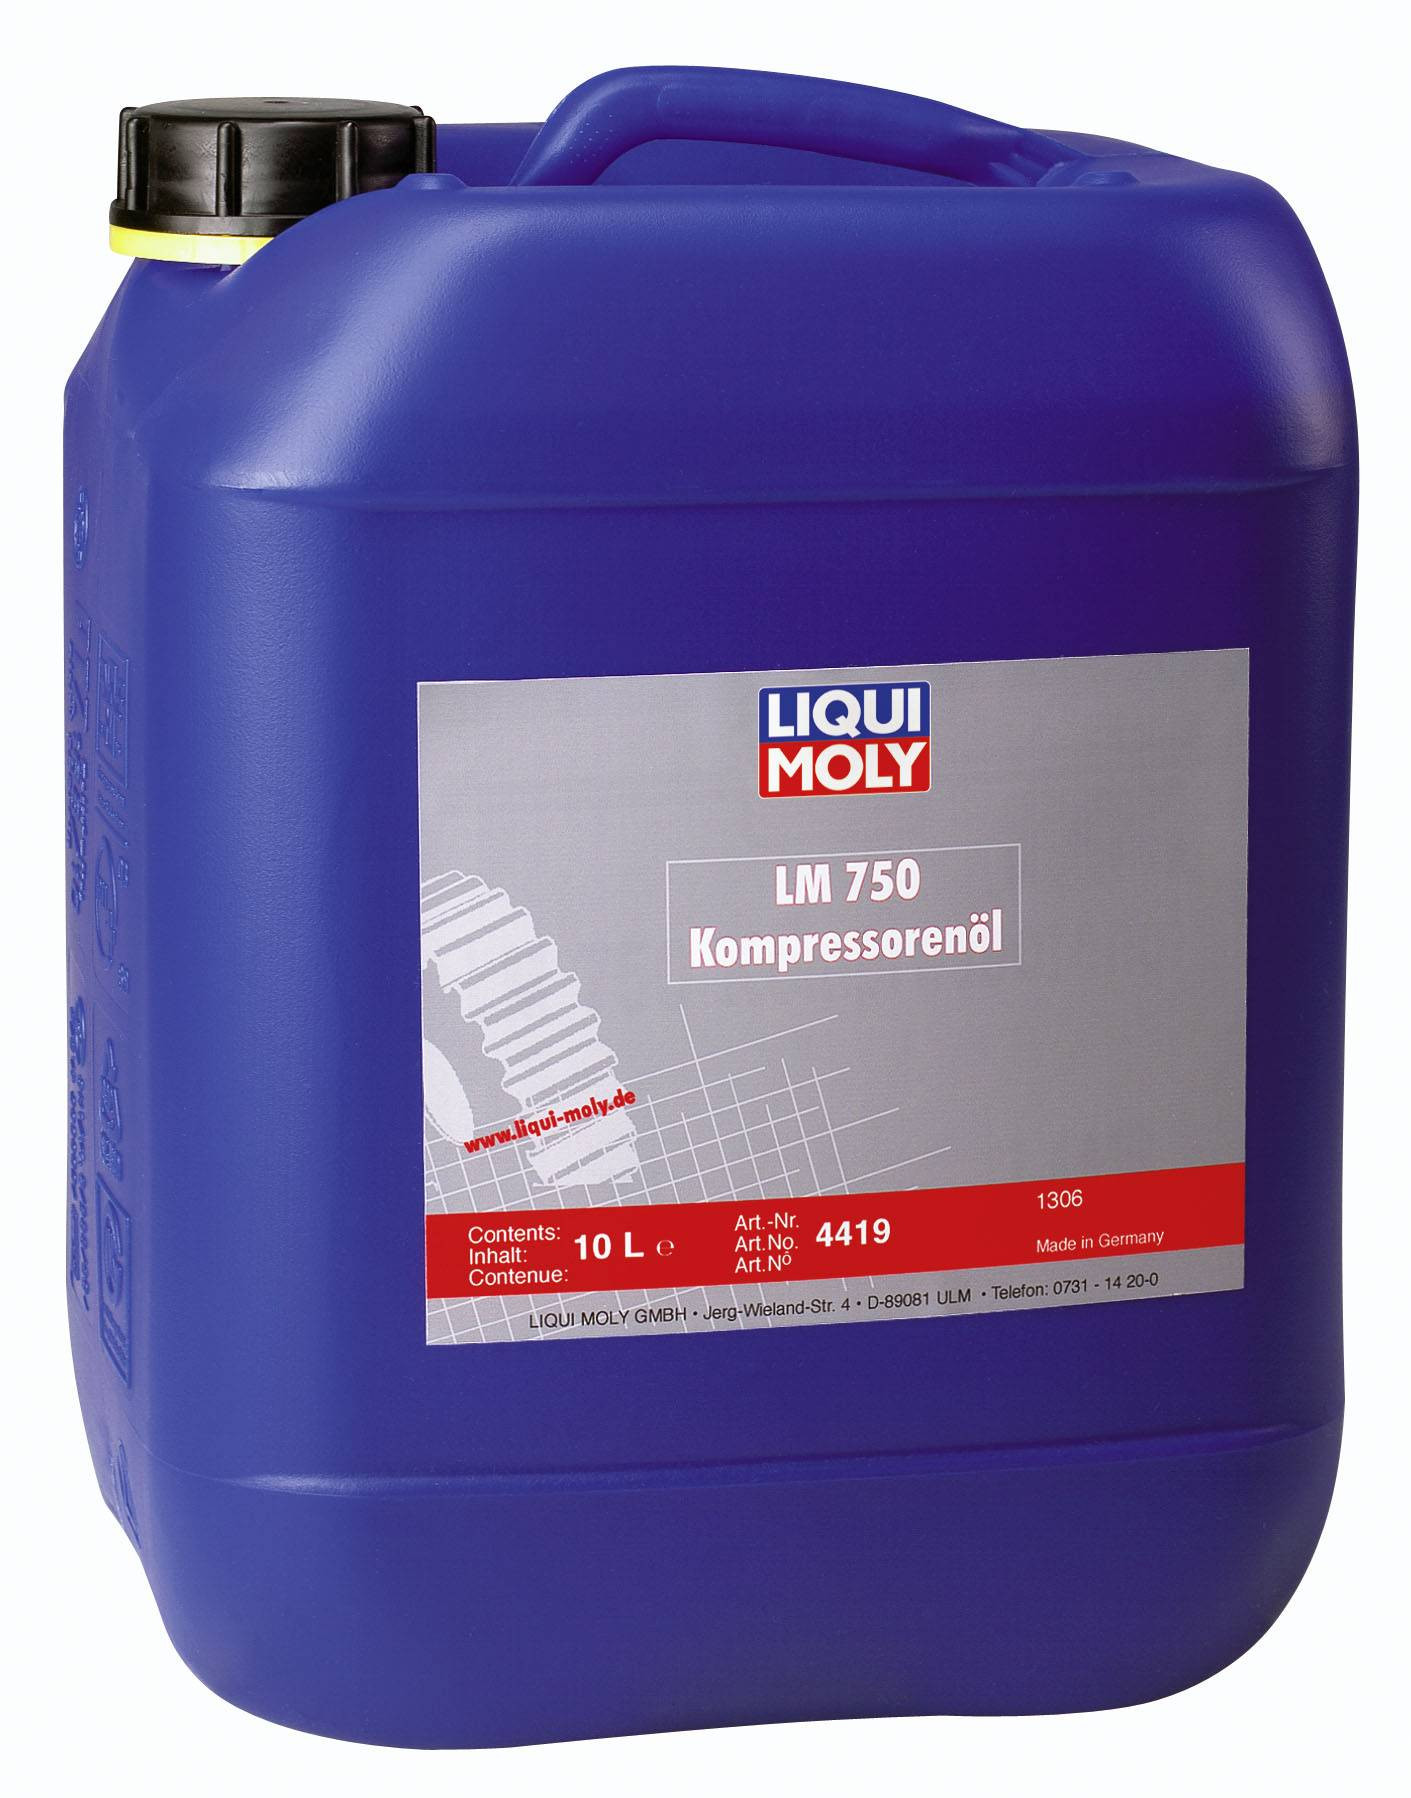 Синтетическое компрессорное масло Liqui Moly LM 750 Kompressorenoil 40 10л